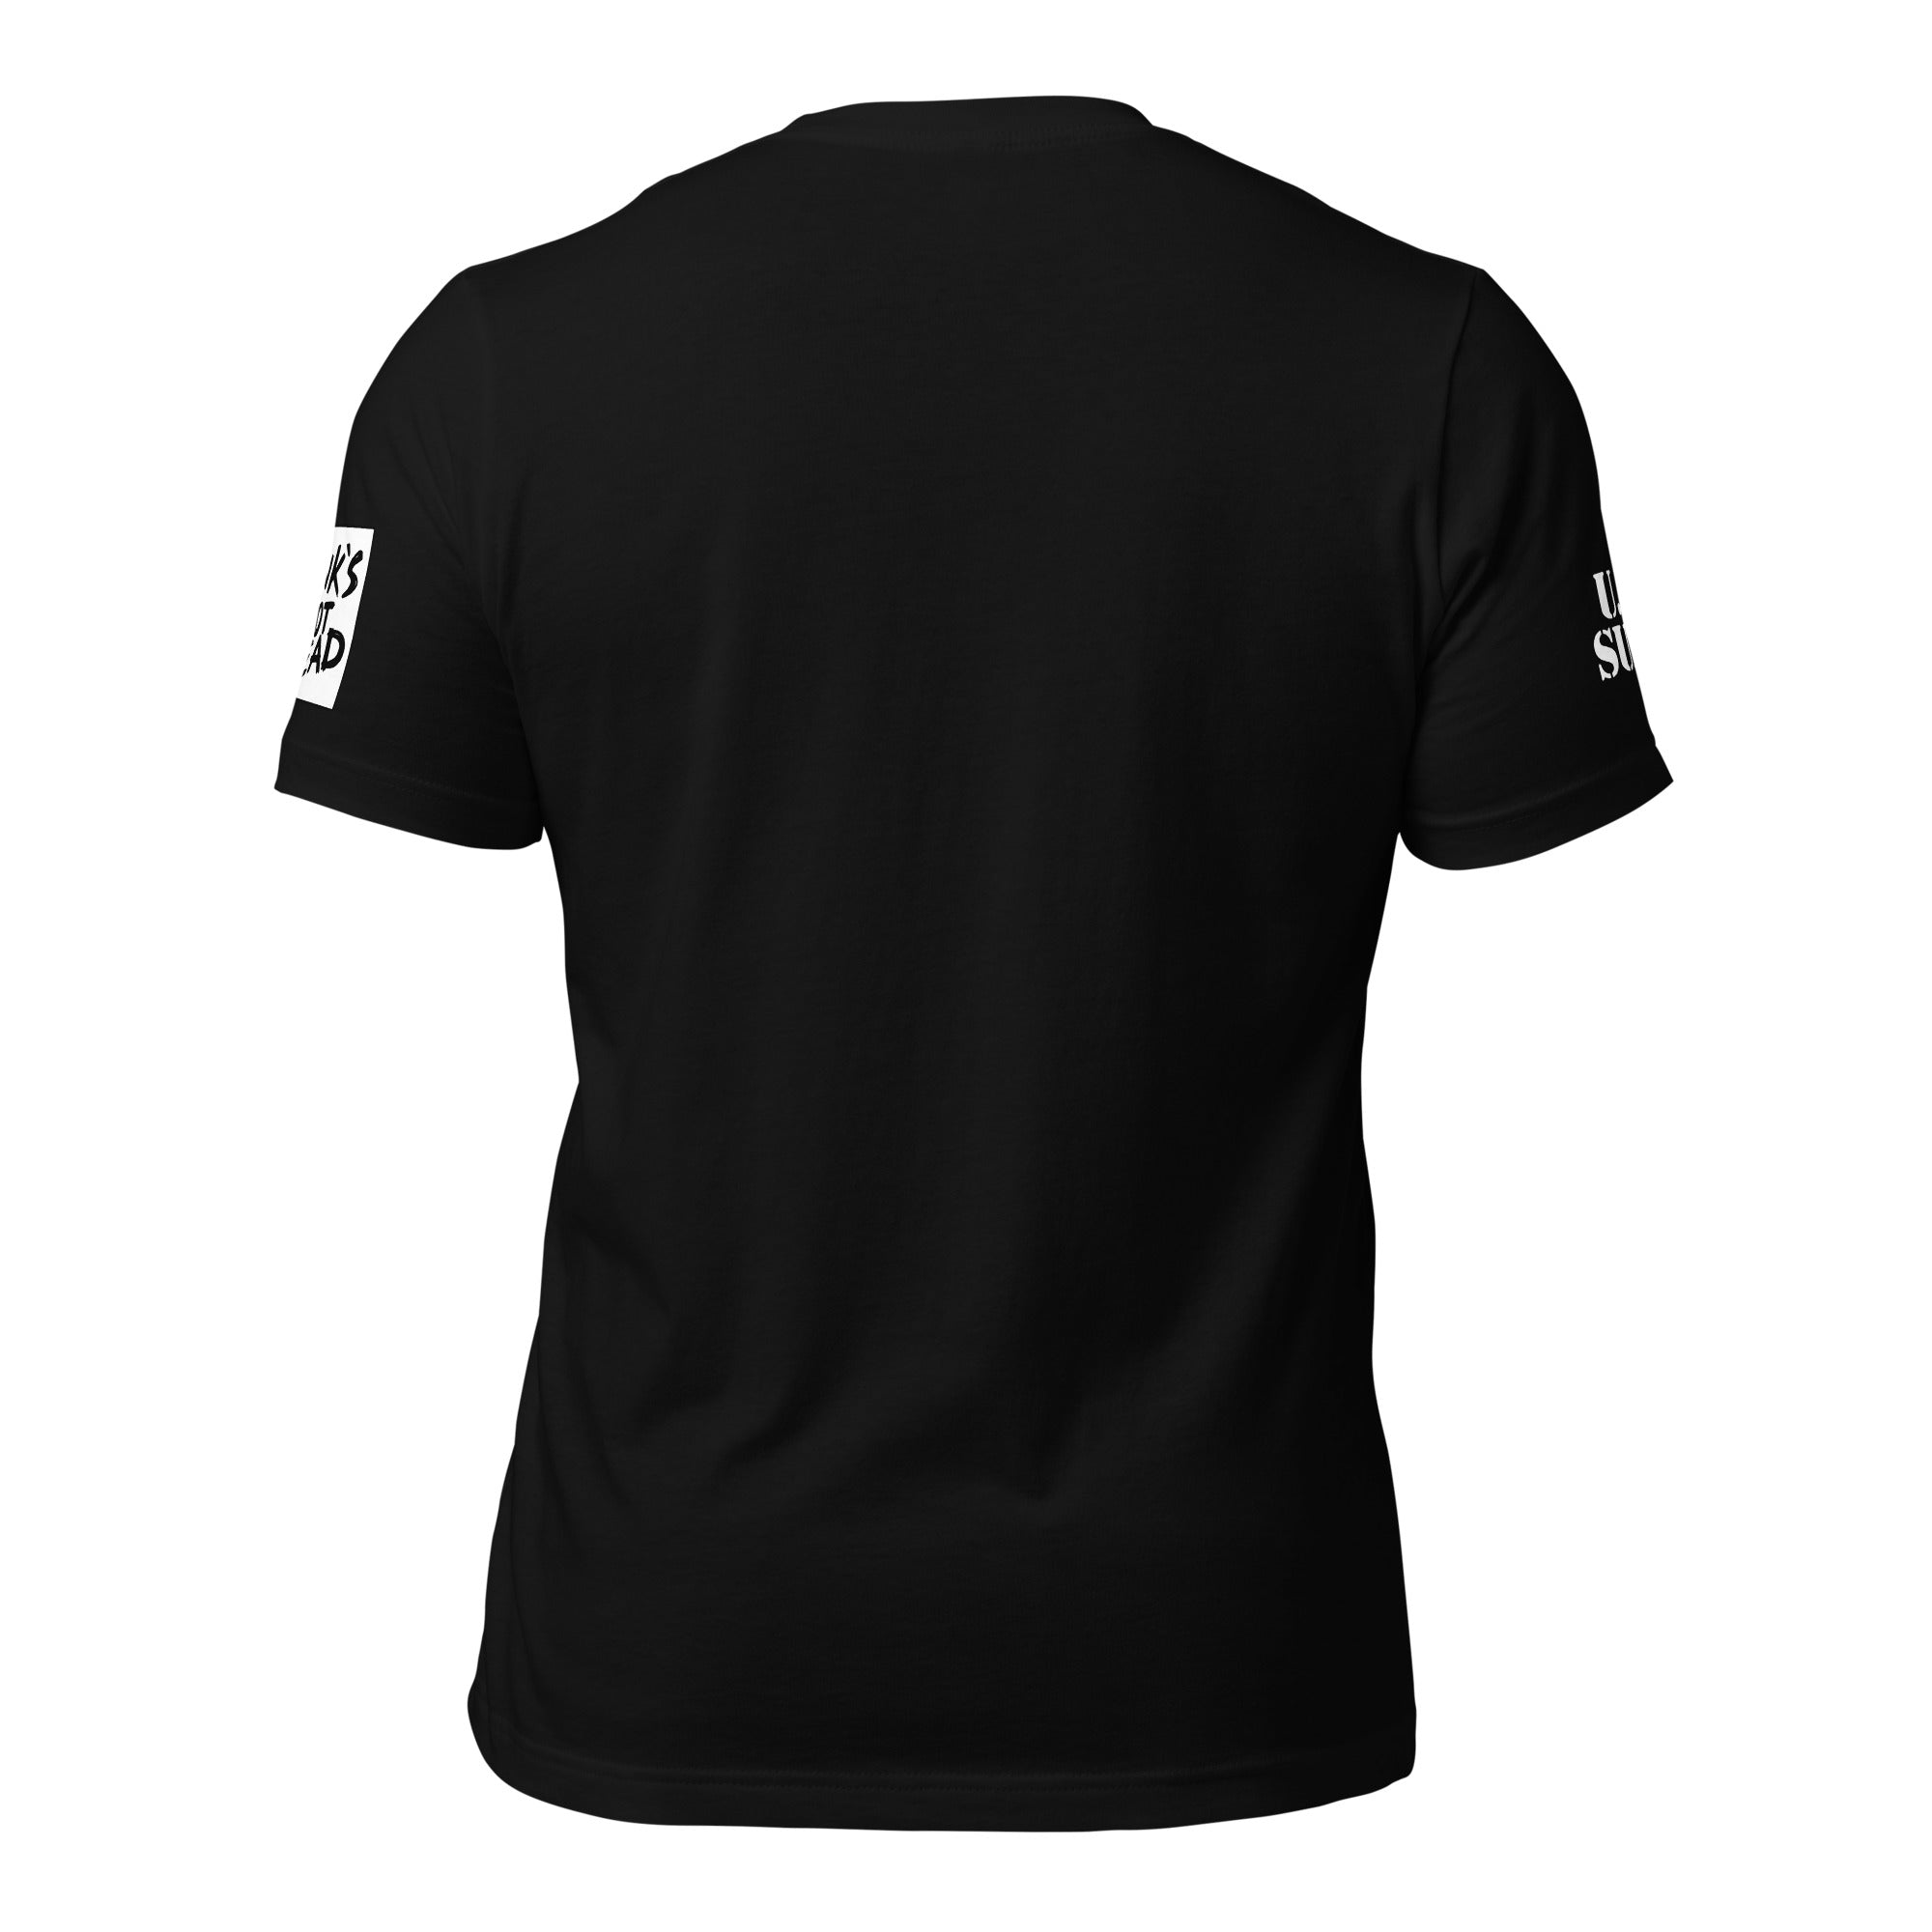 Unisex Crew Neck T-Shirt - Punk Rock Series Sector 9 - GRAPHIC T-SHIRTS